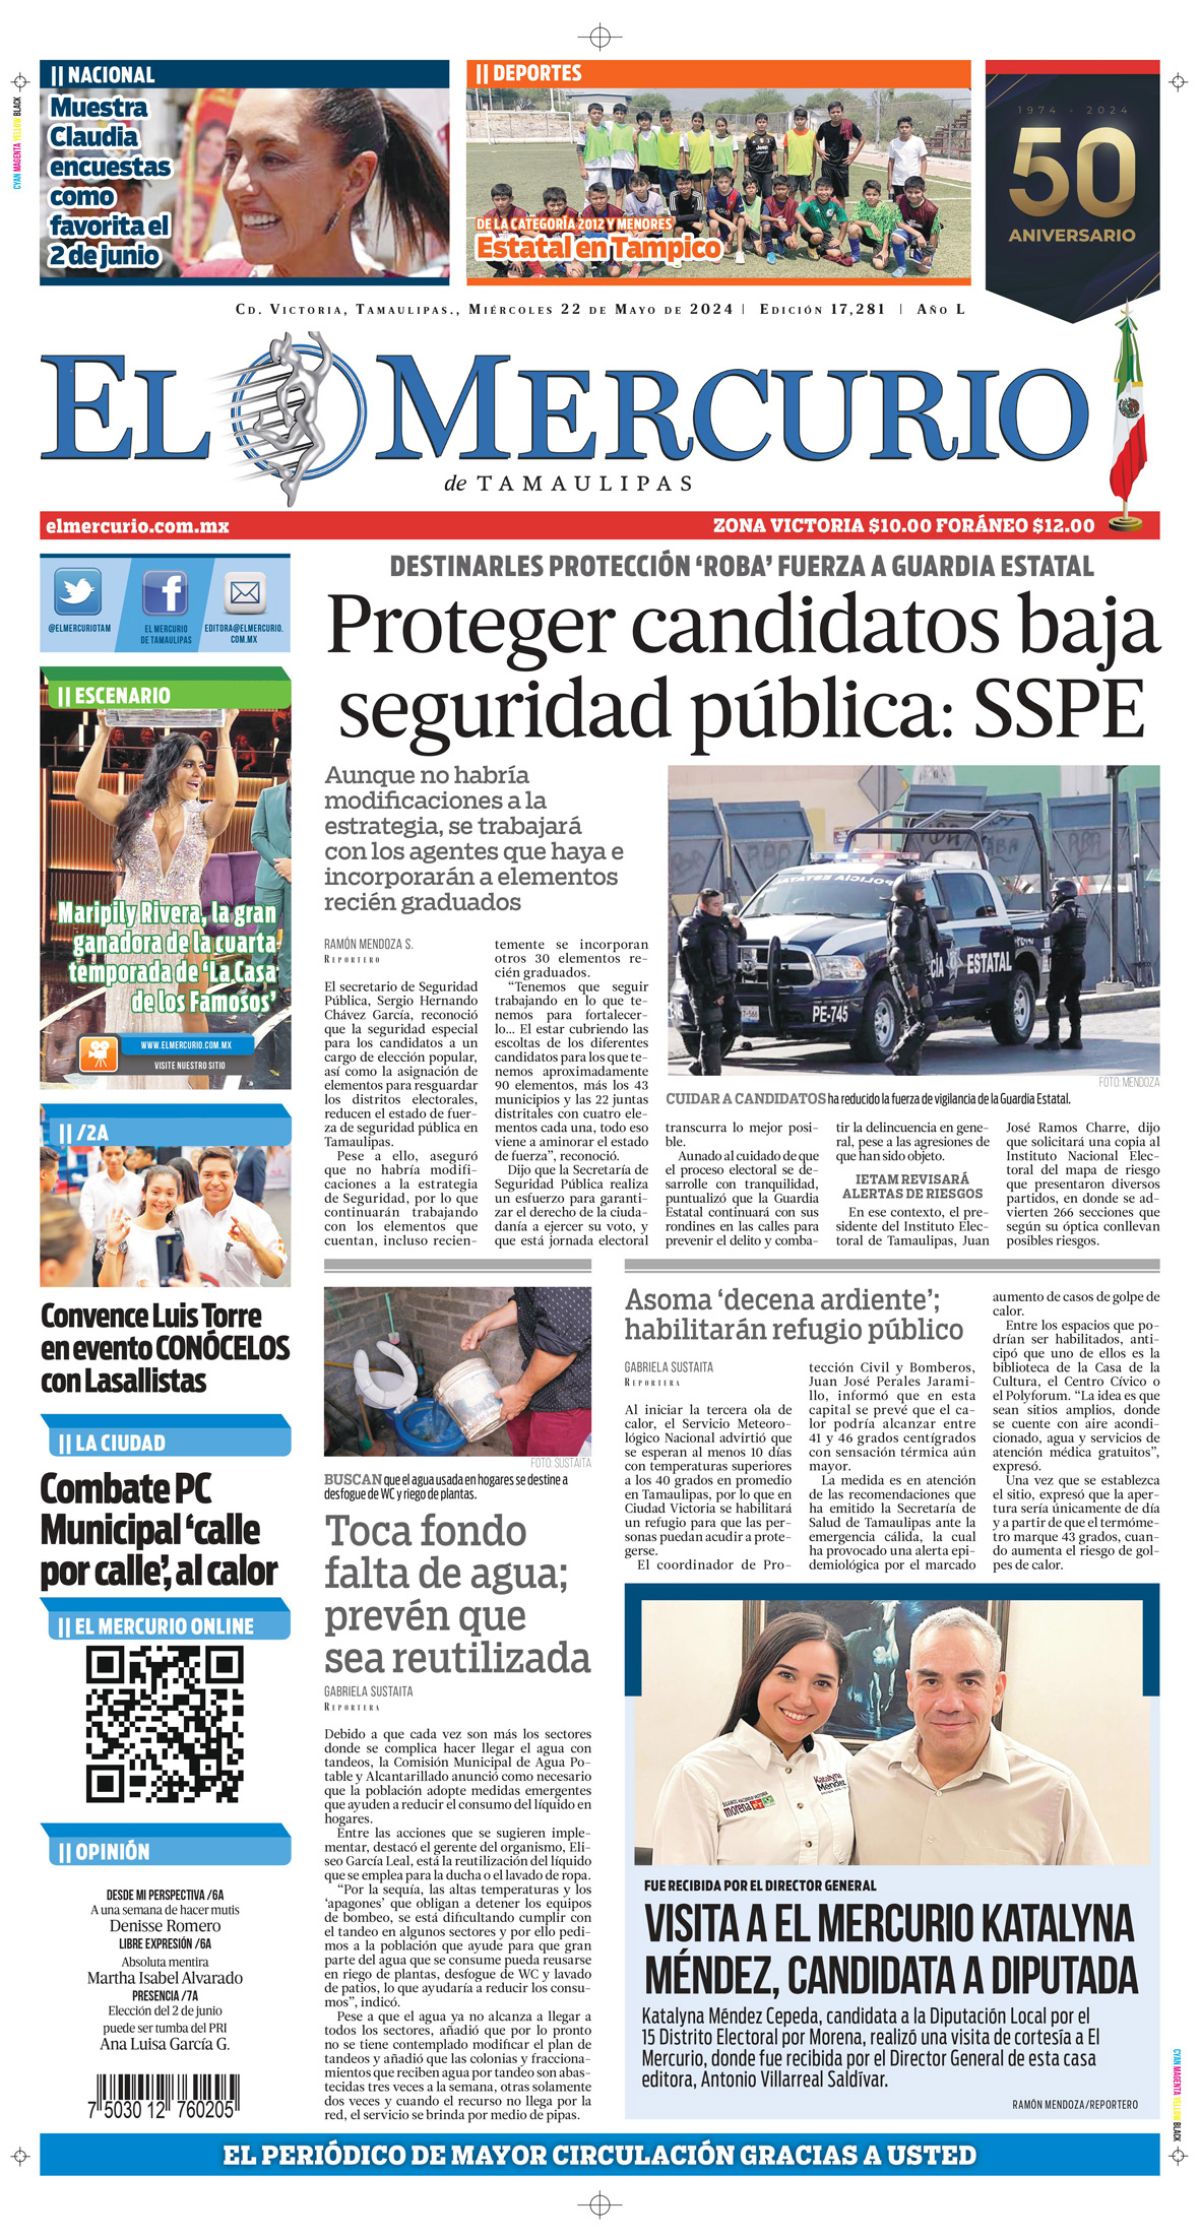 Proteger candidatos baja seguridad pública: SSPE